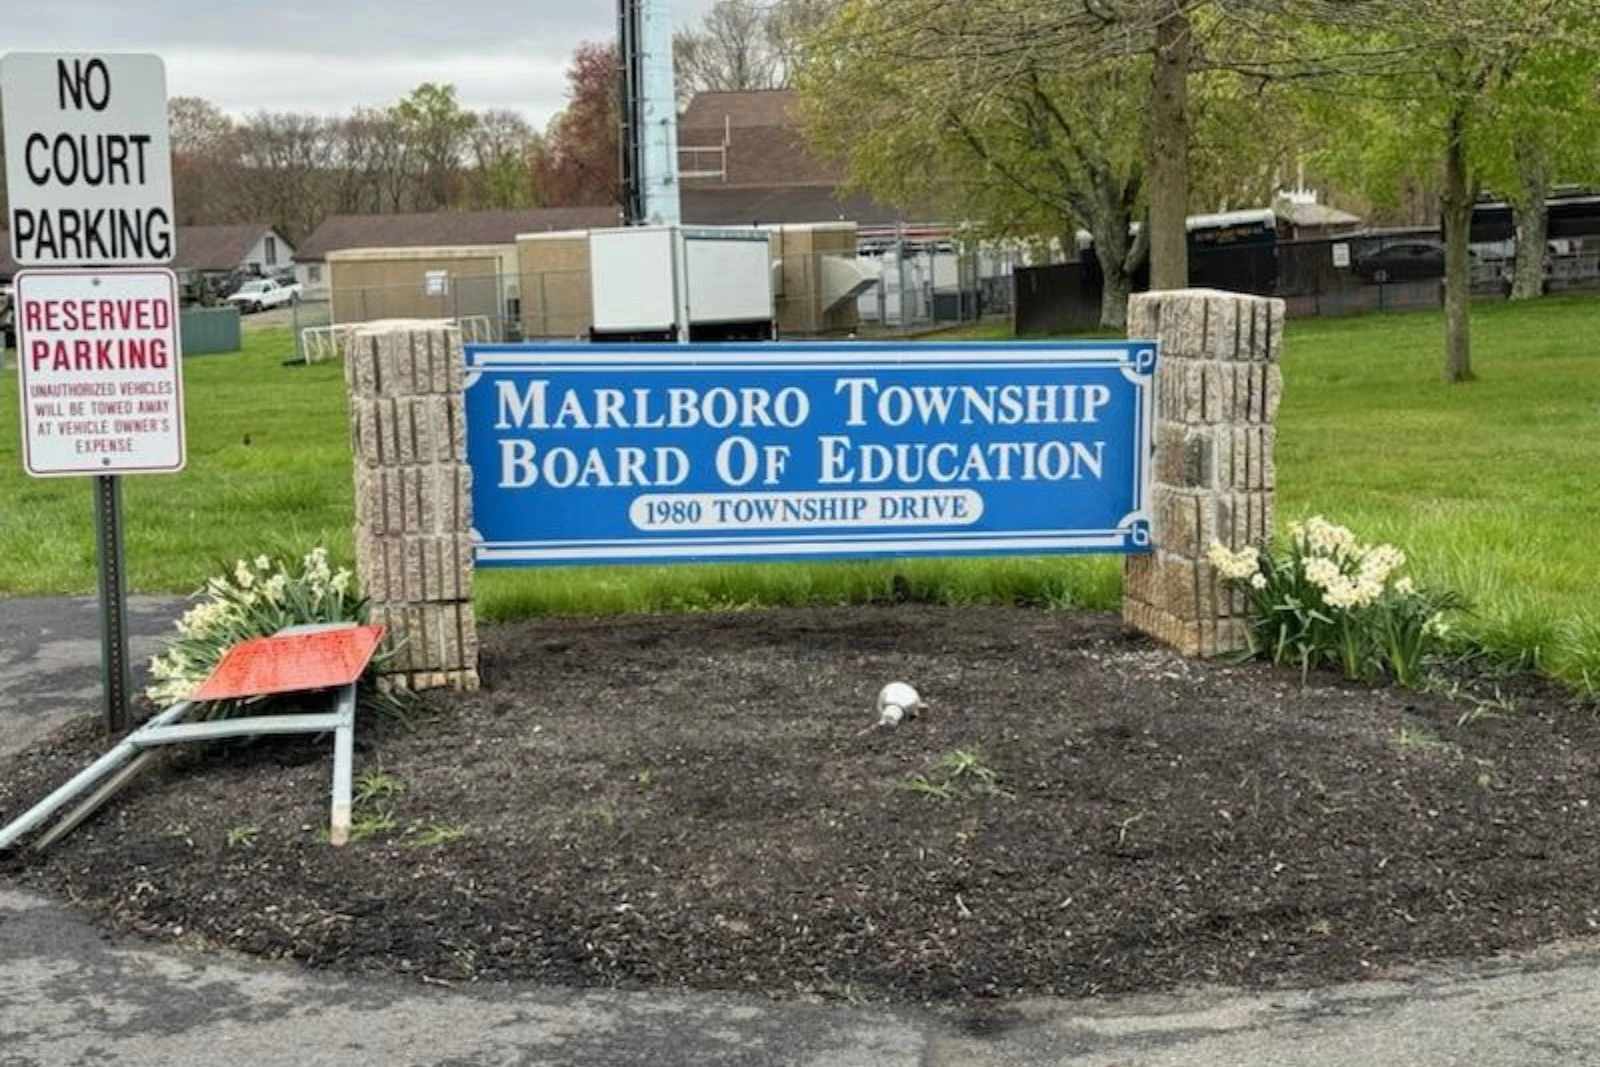 Marlboro Township Board of Education office entrance